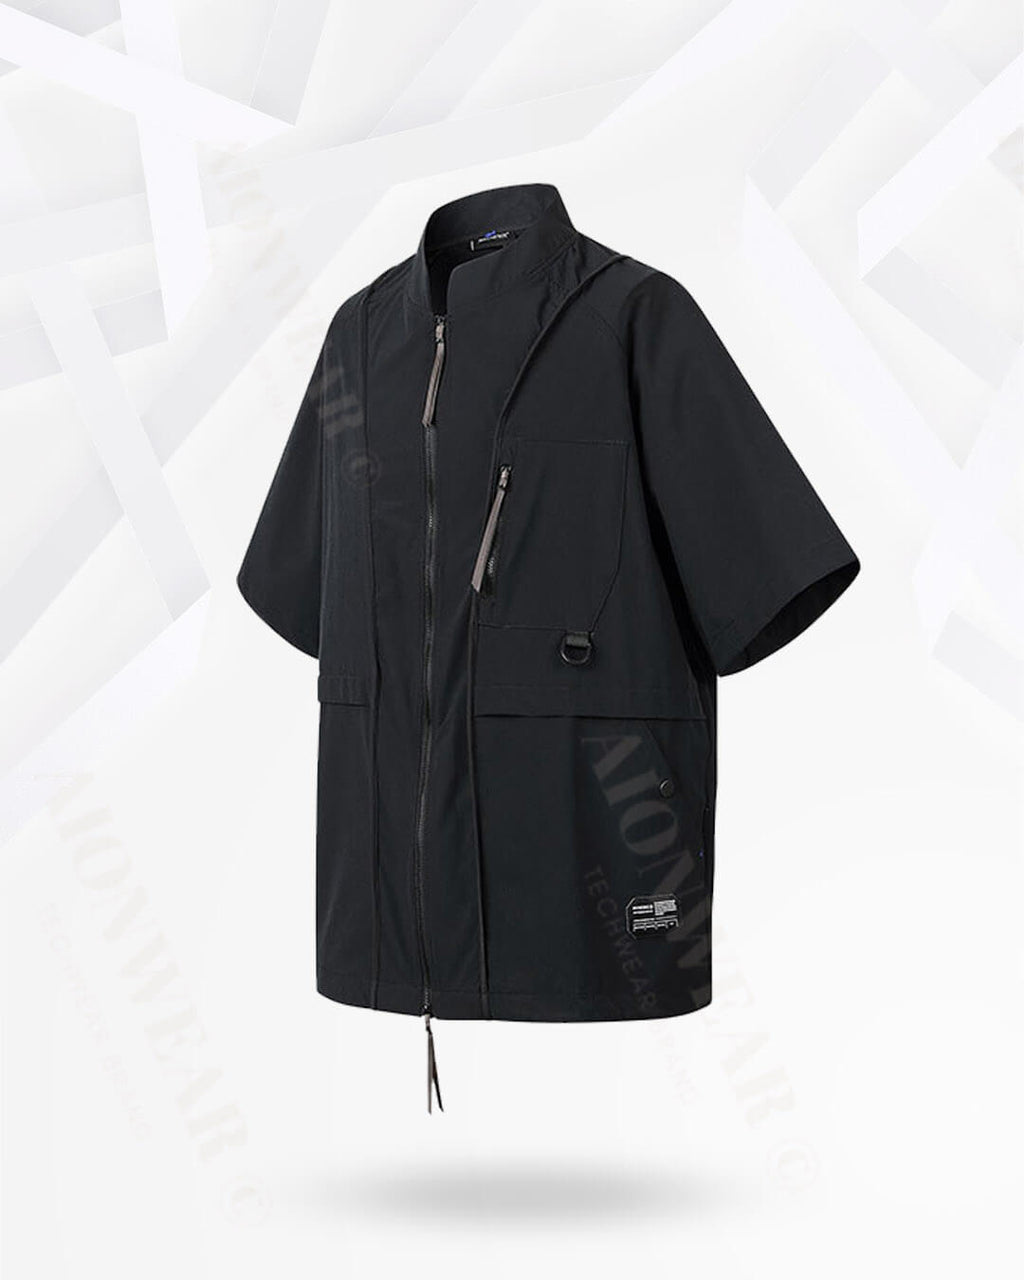 Black nylon jacket